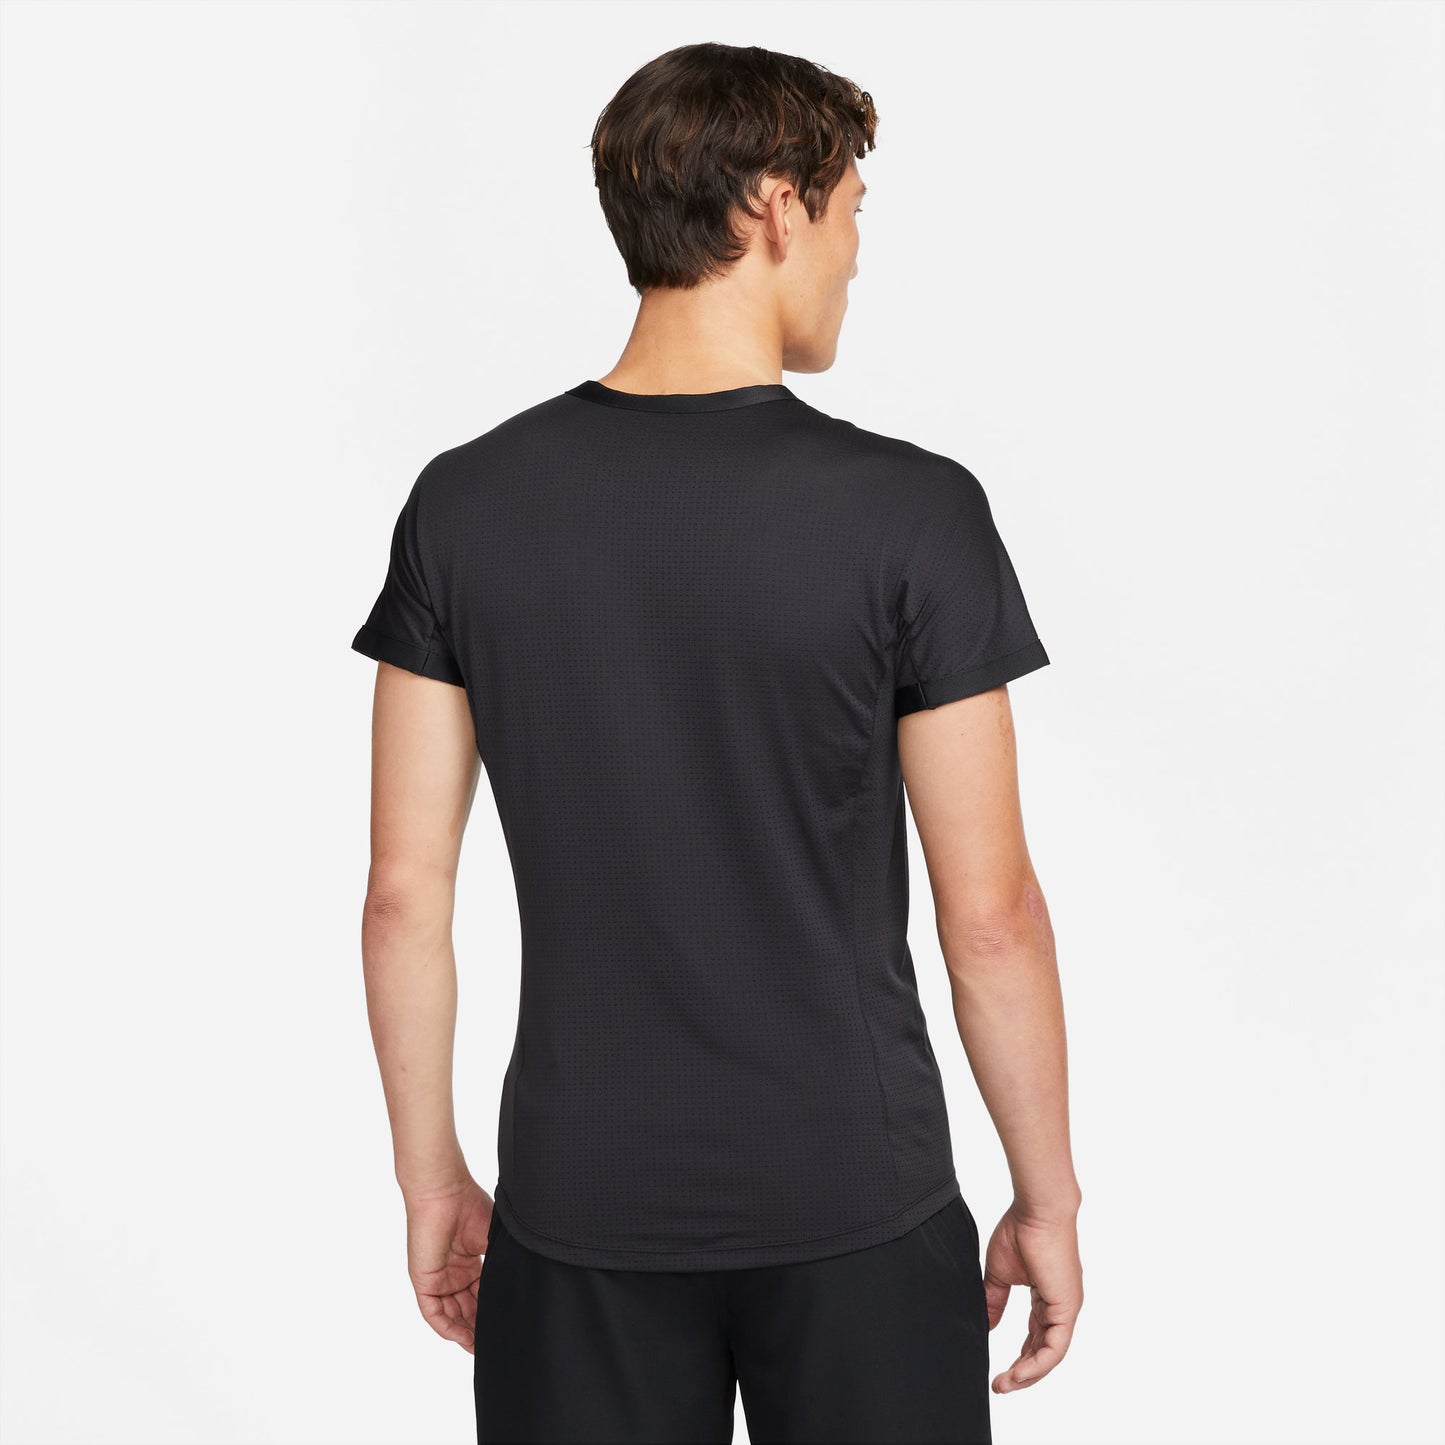 Nike Rafa Dri-FIT ADV Men's Tennis Shirt Black (2)